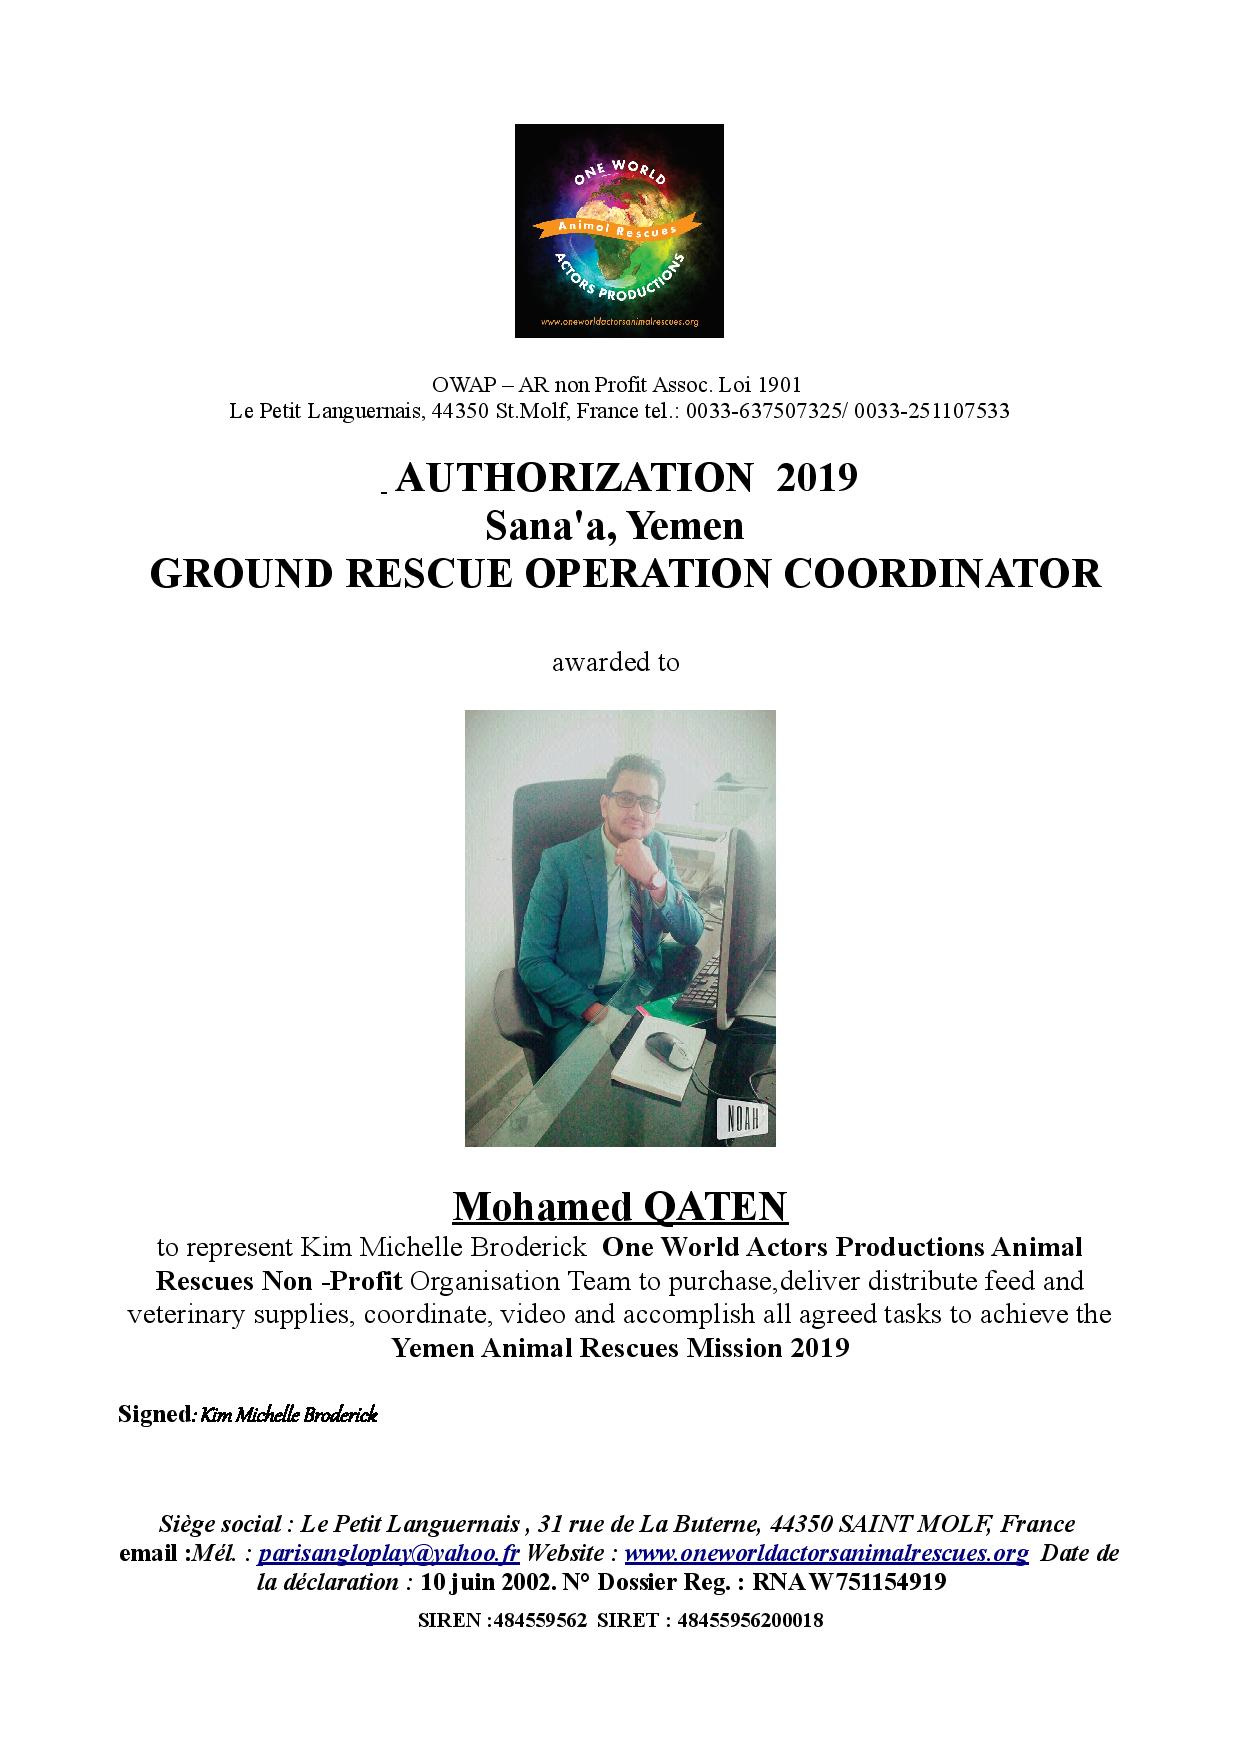 Auth VOL QATEN OWAP AR certificate 2019-page-001.jpg